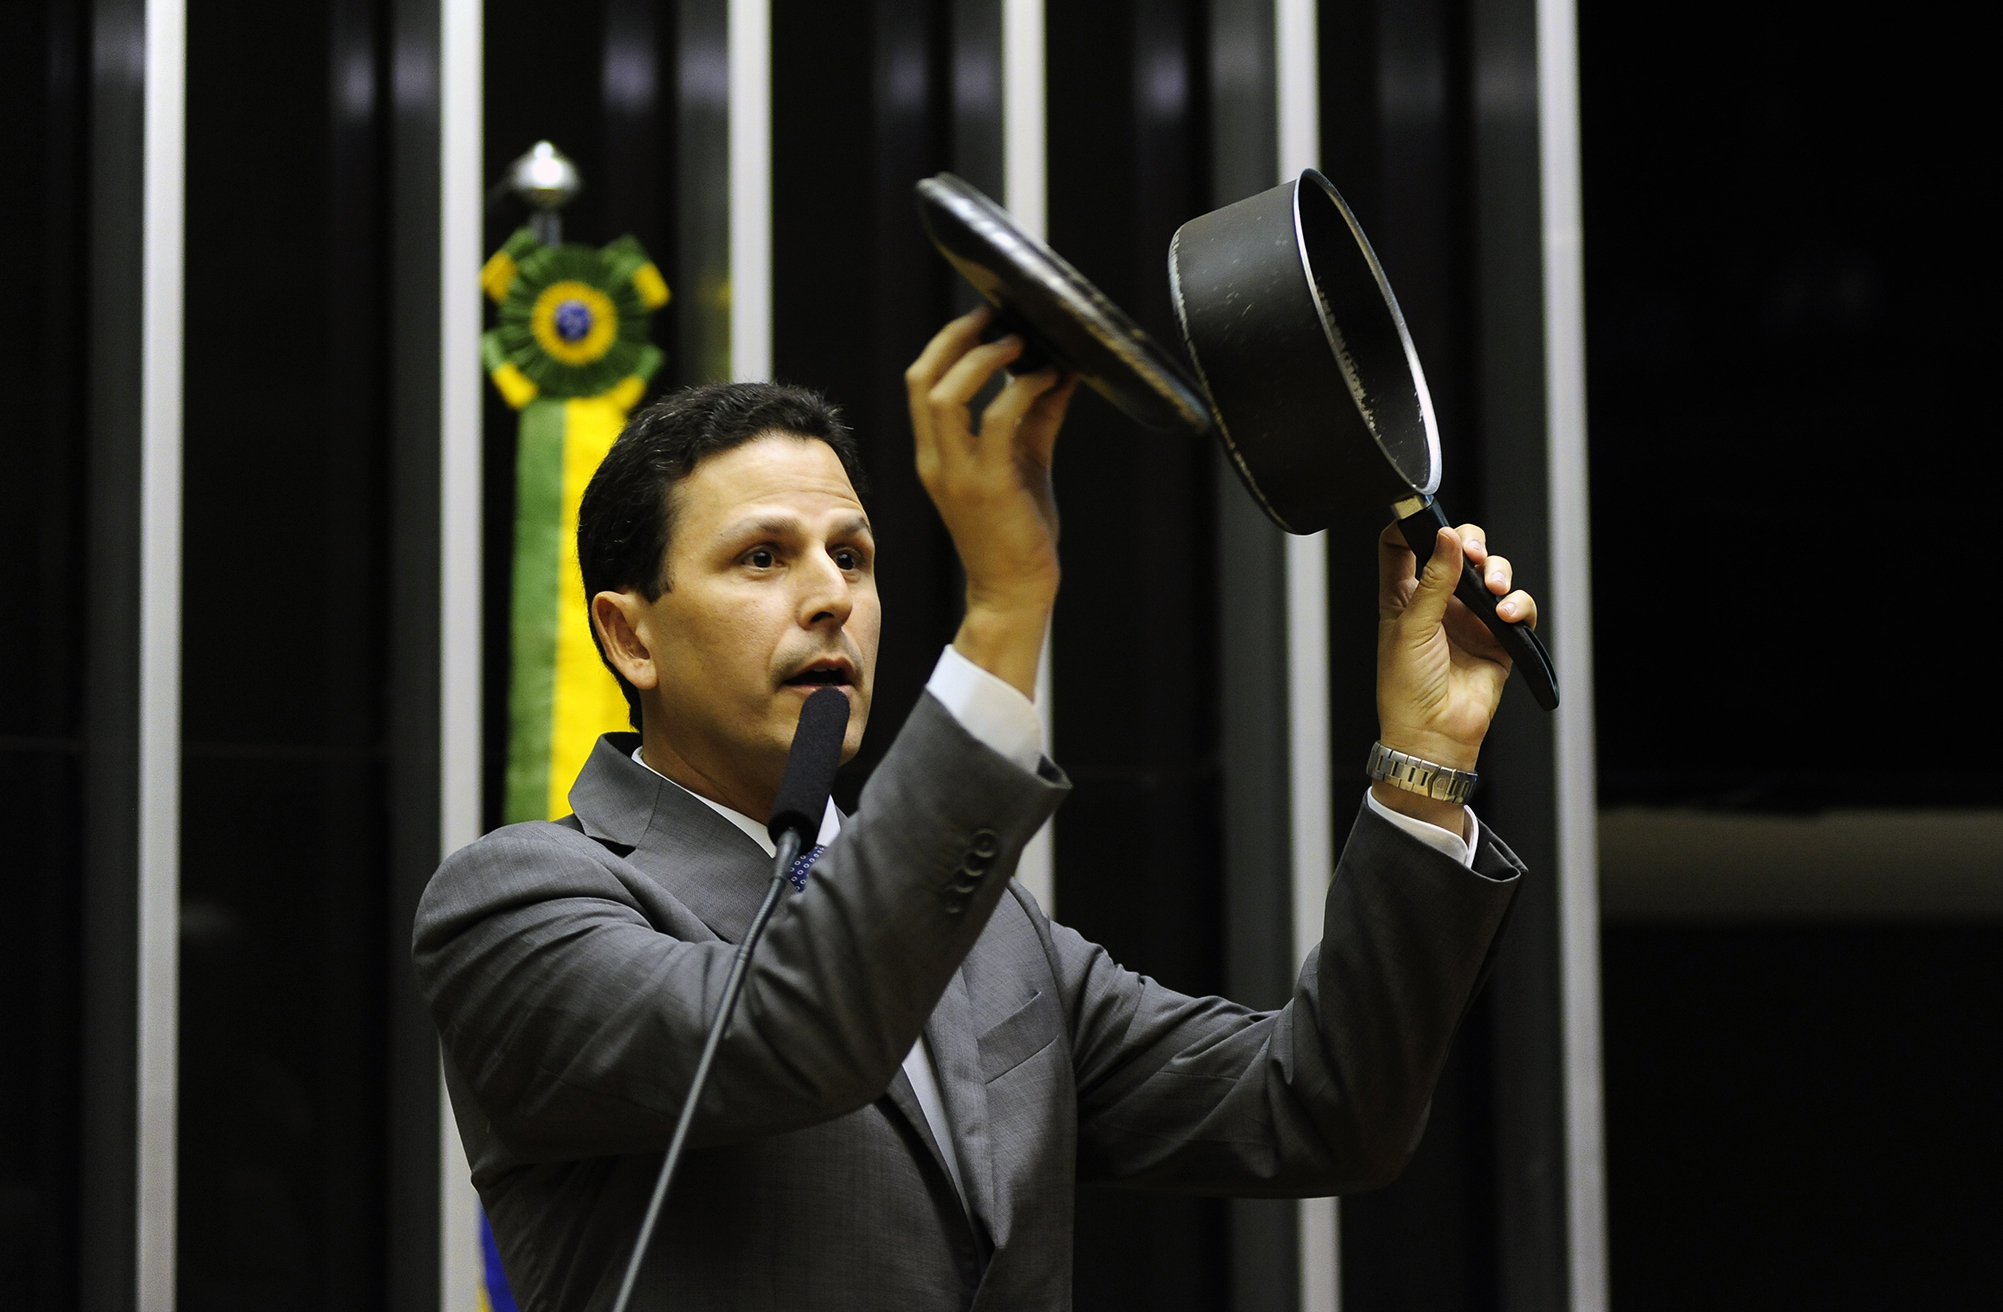 Ministro golpista: Bruno Araújo, lobista profissional contra o MCMV